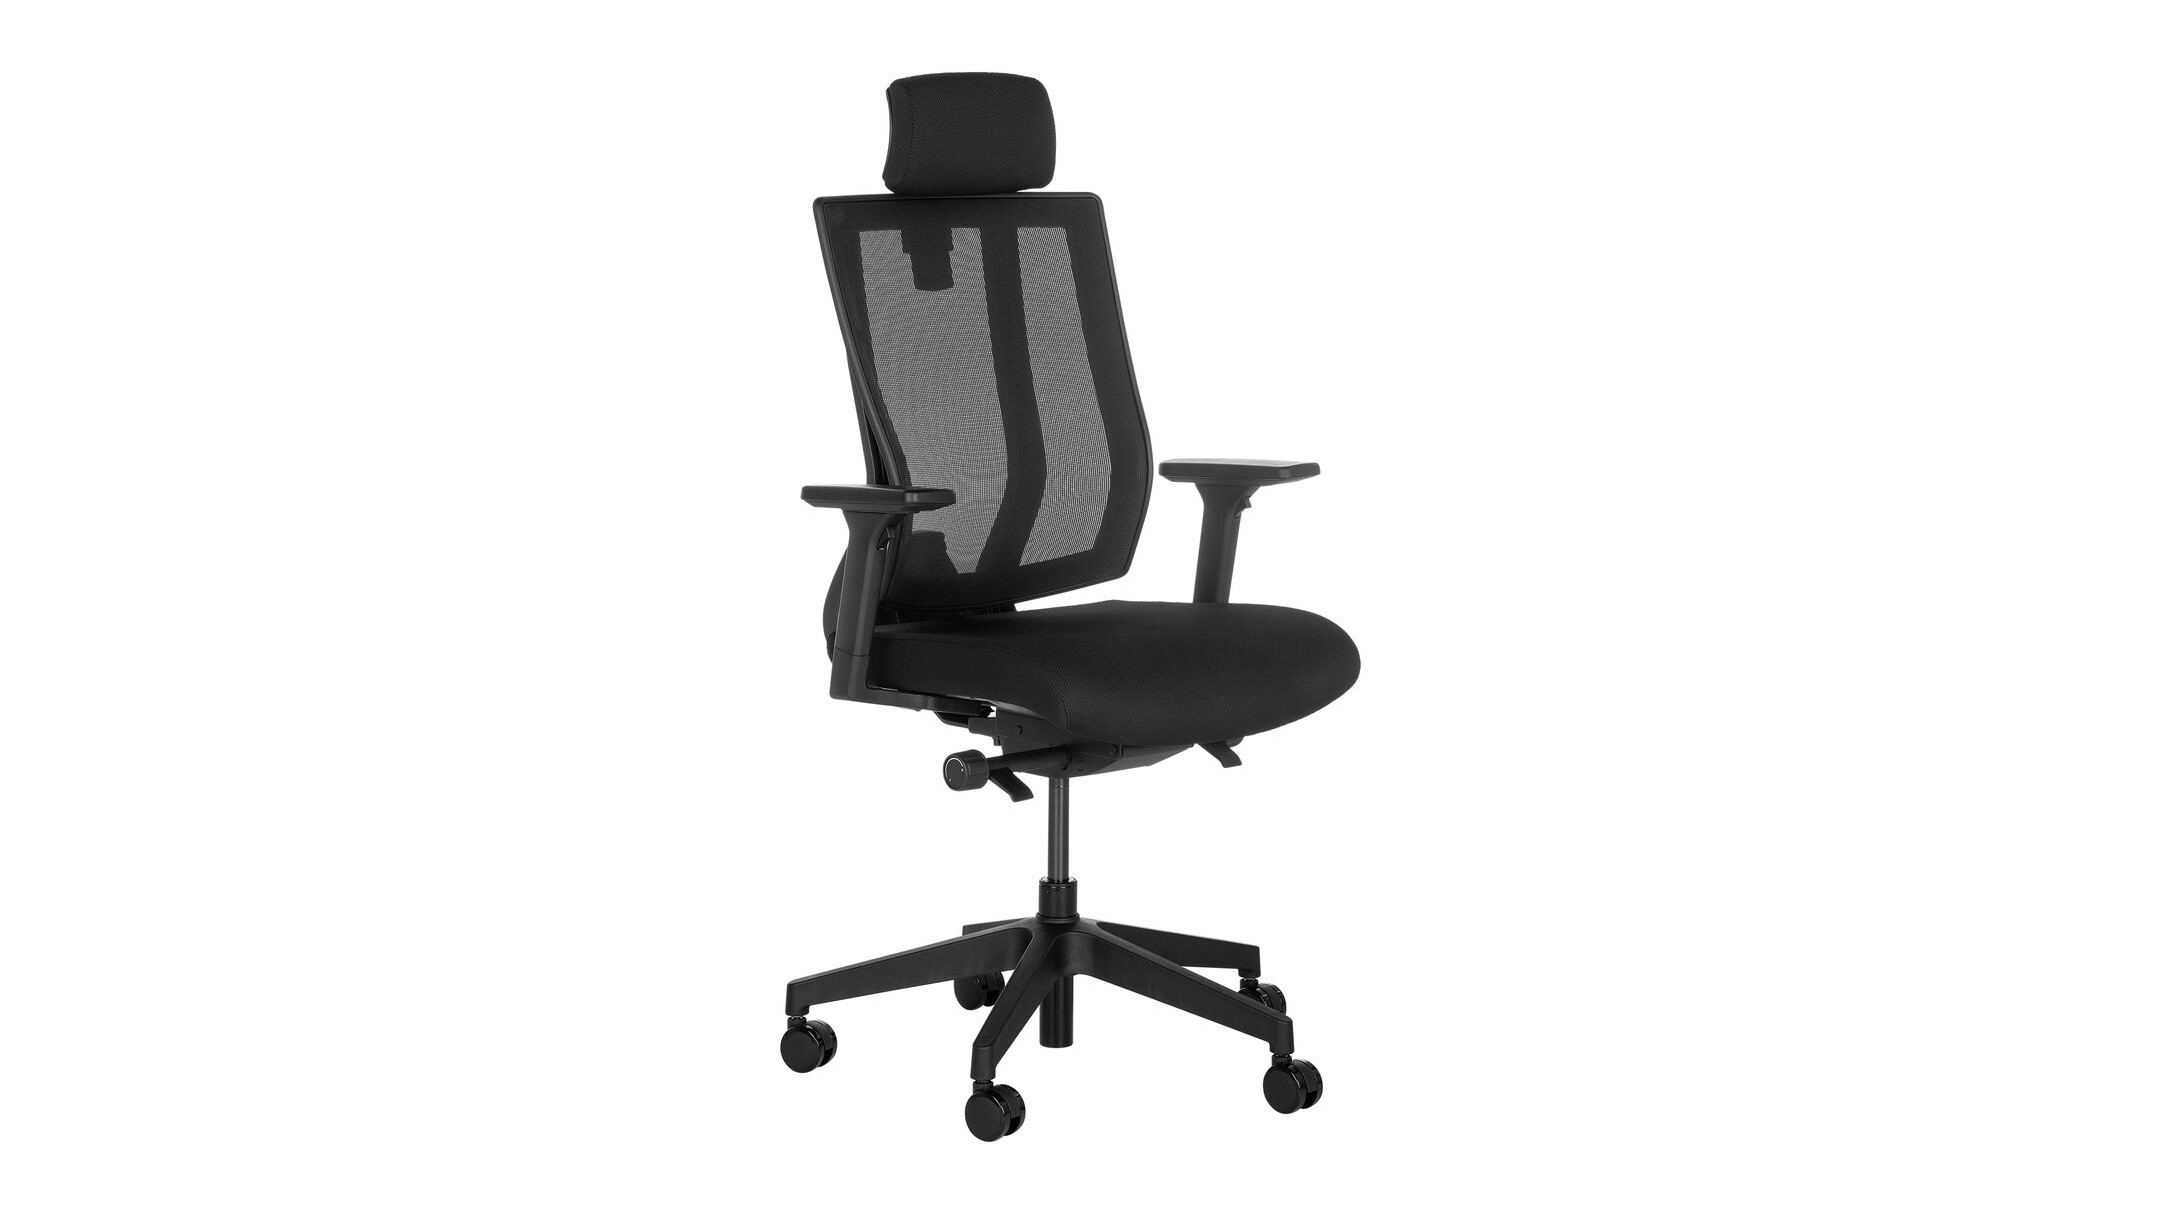 The best adjustable chair, Vari, arm rests, wheels, neck rest, comfortable, lumbar support, Headrest